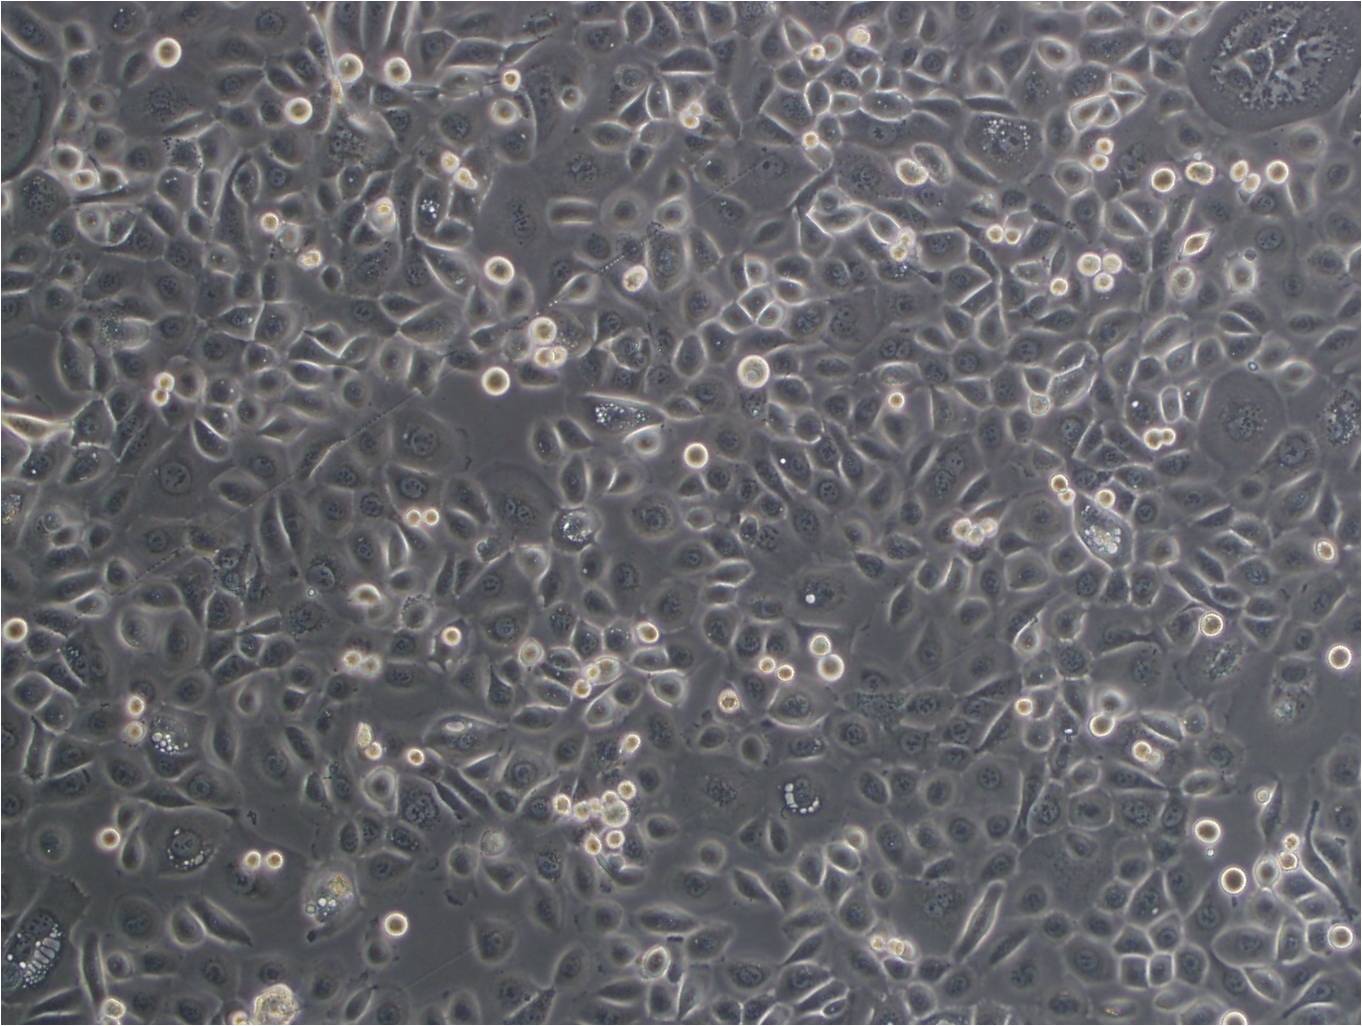 NCI-H1792 cell line人肺癌腺癌细胞系,NCI-H1792 cell line